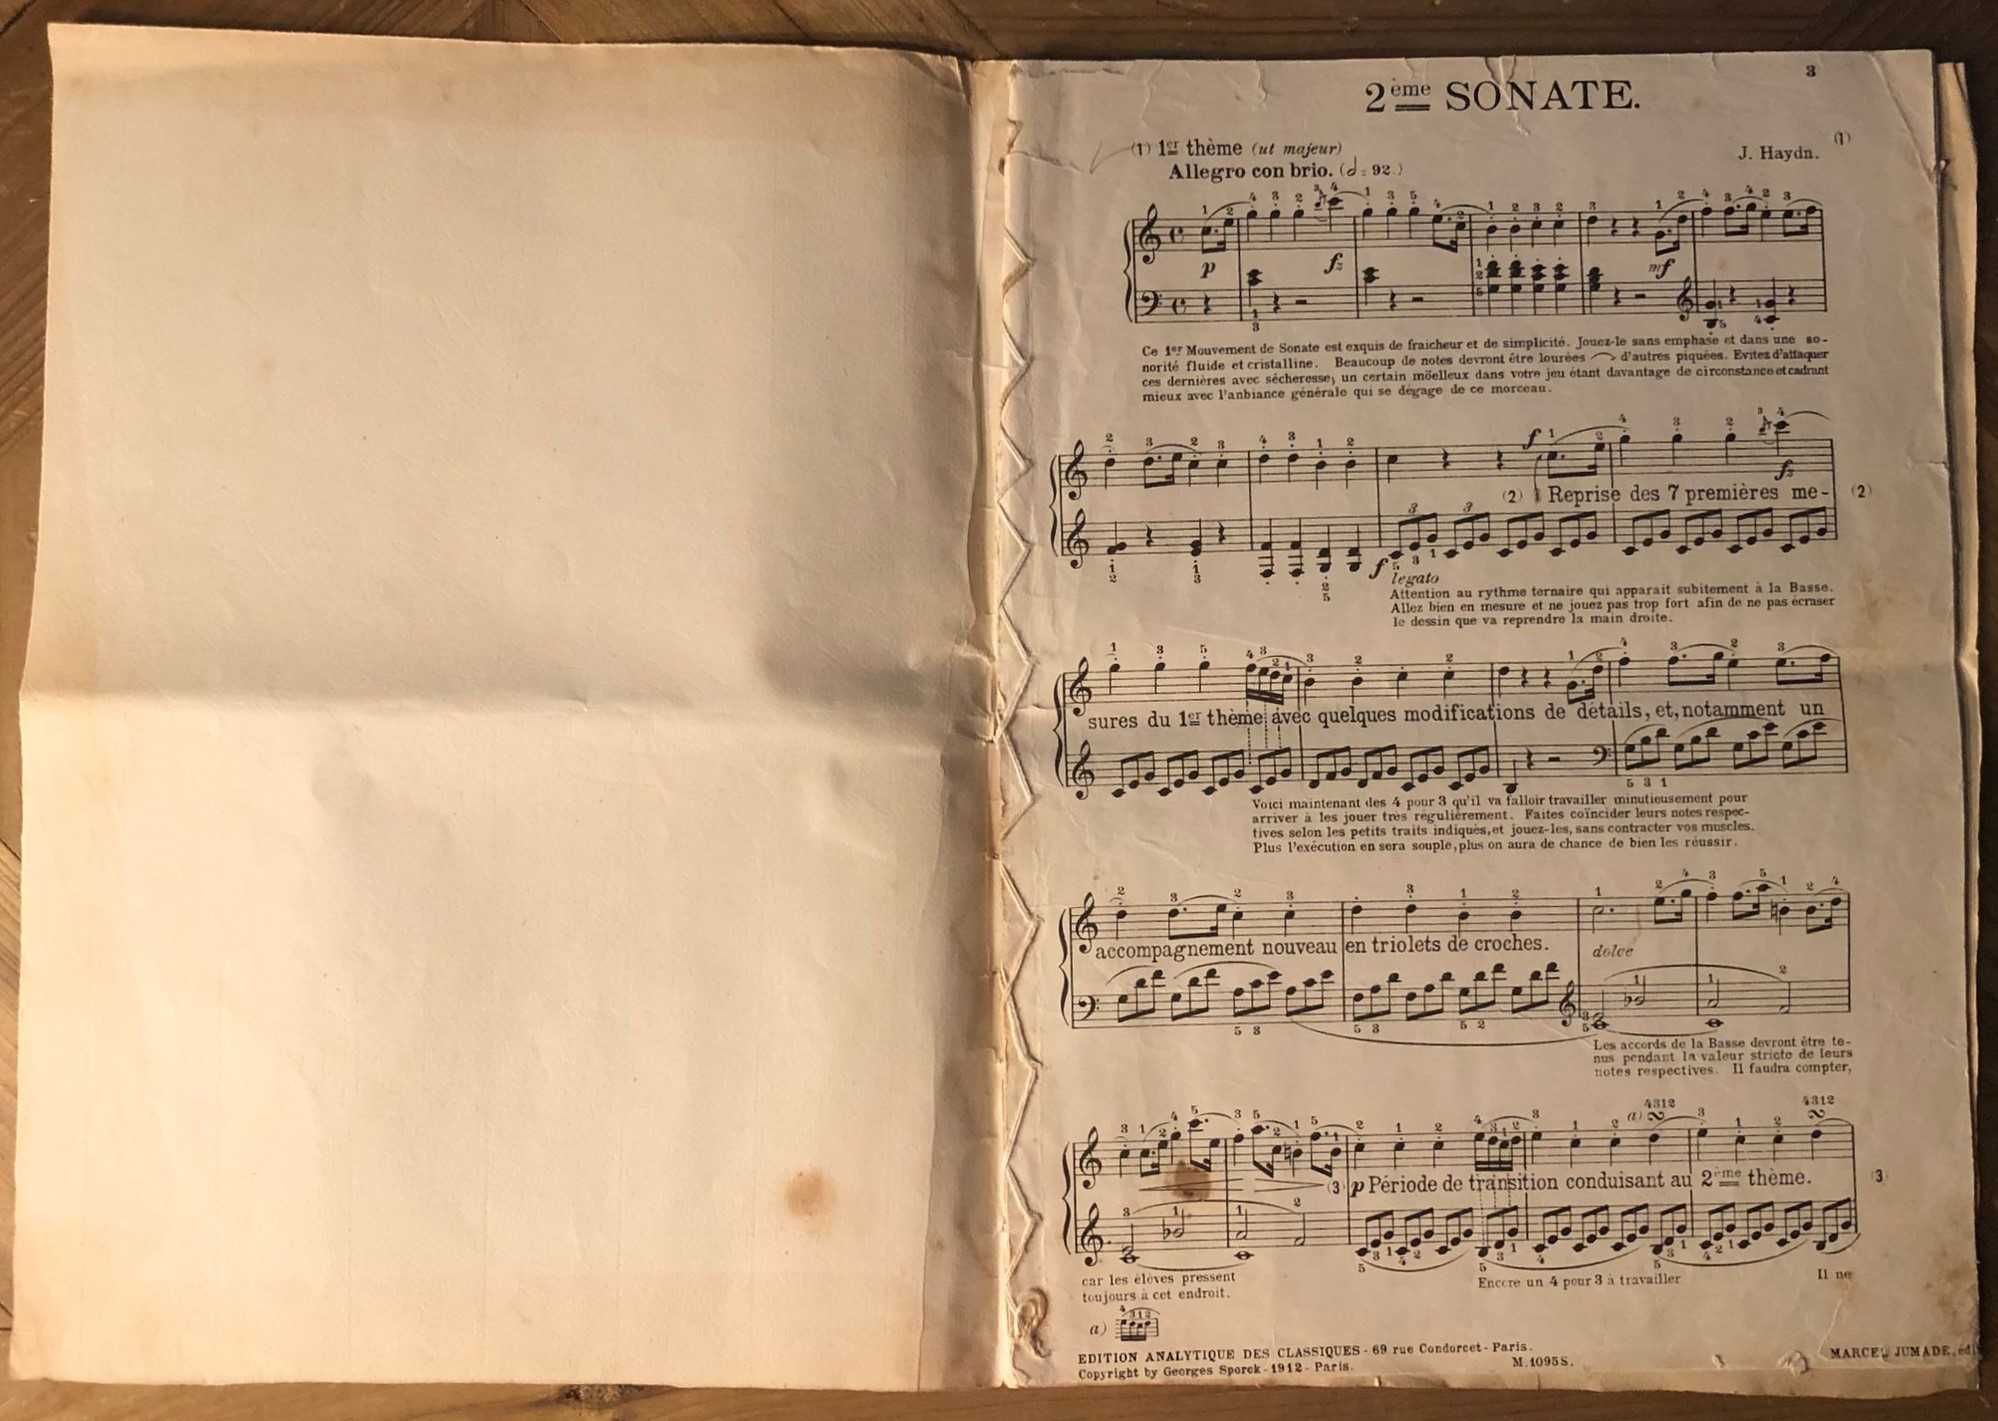 Partitura de Ensino anotada: Franz Joseph Haydn  2eme SONATA  1912